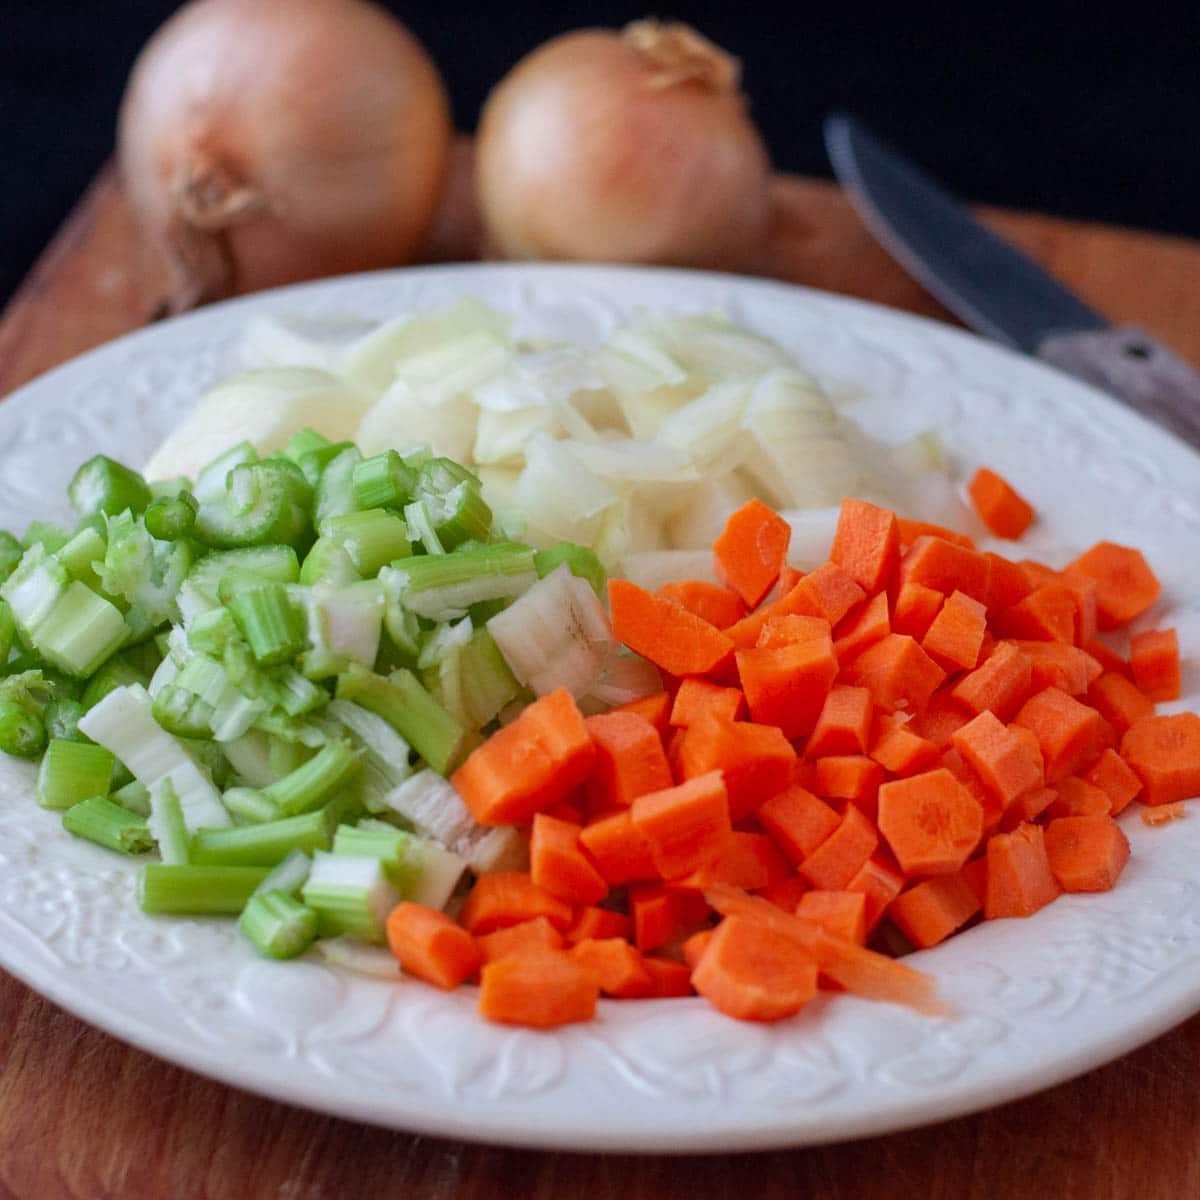 carrot onion celery called mirepoix